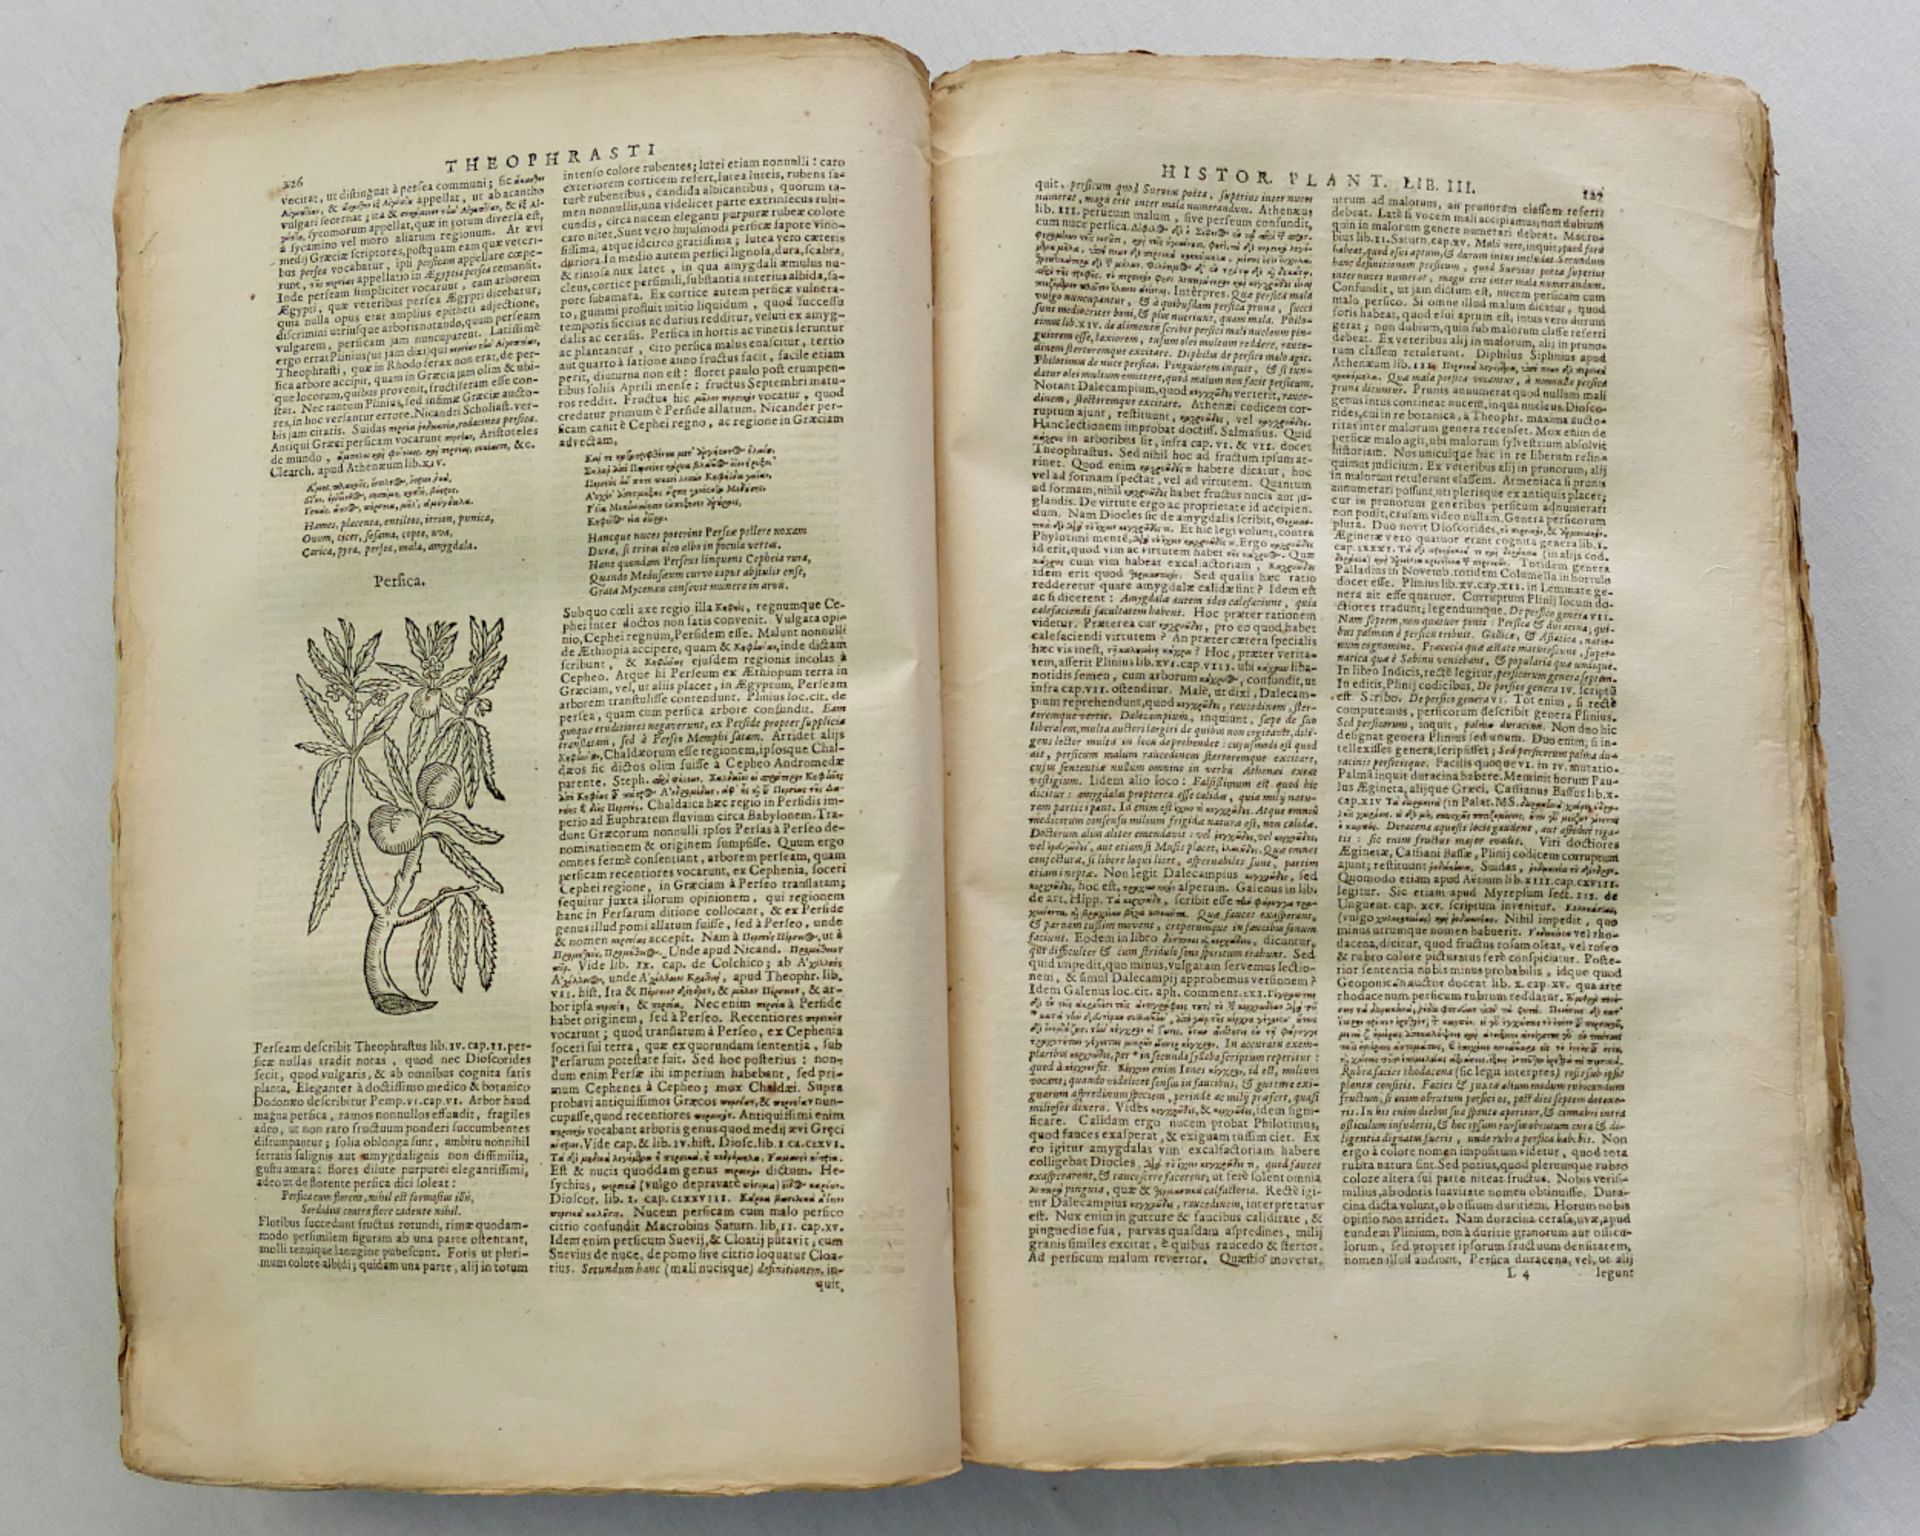 1 Buch "Theophrasti Eresii De historia plantarum" von Johannes BODAEUS, Amsterdam 1644, ca. 1187 Sei - Image 3 of 4